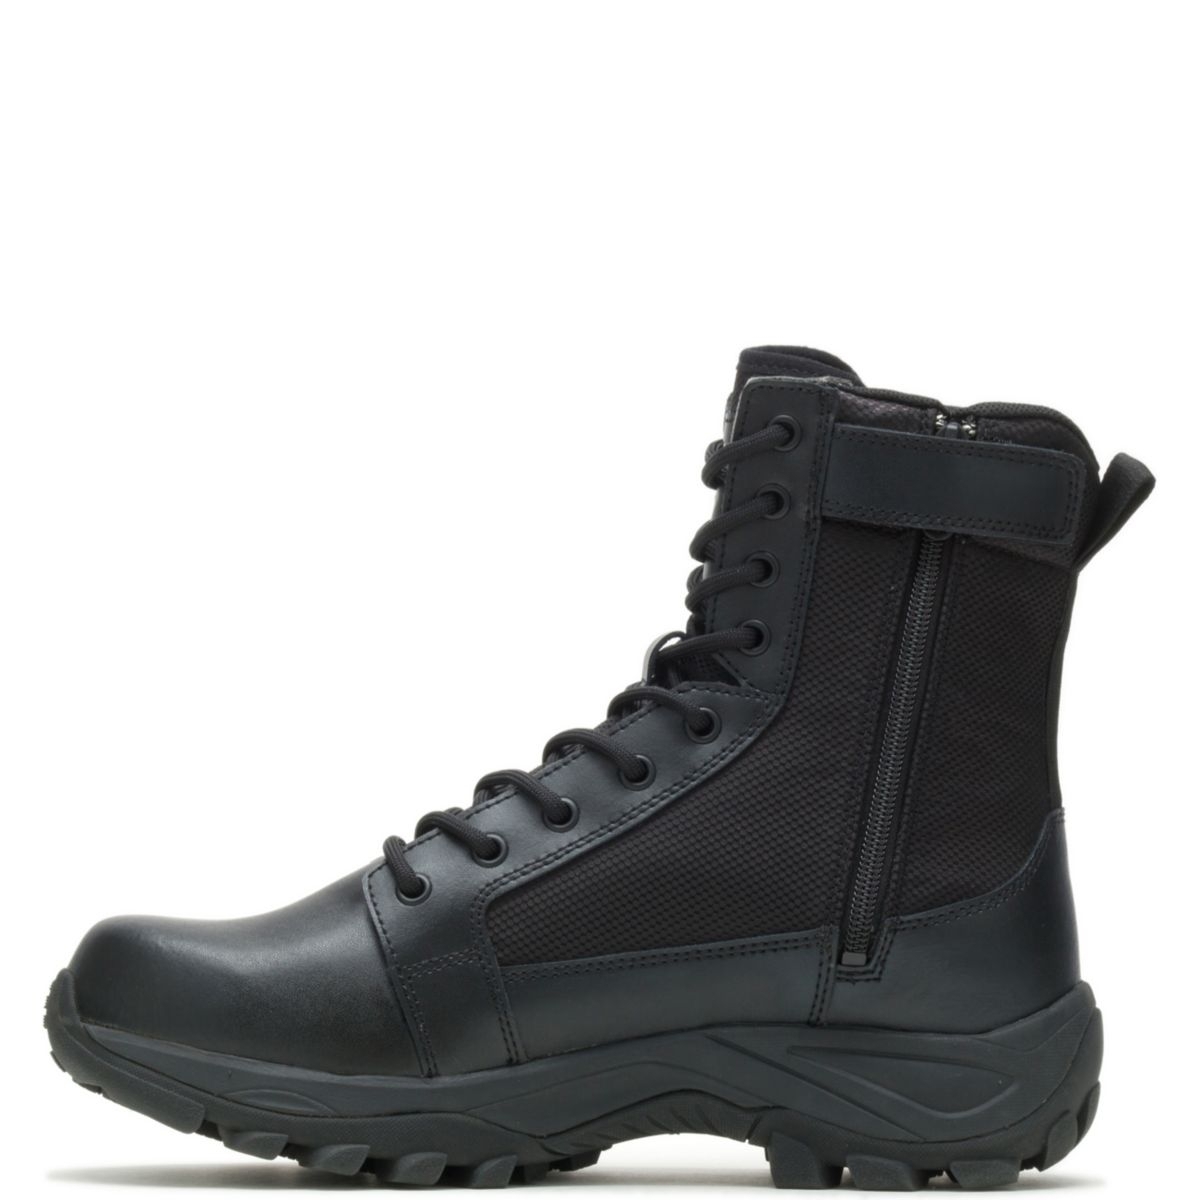 Bates Men's Fuse 8-inch Side Zip Waterproof Boot Black - E06508 BLACK - BLACK, 9